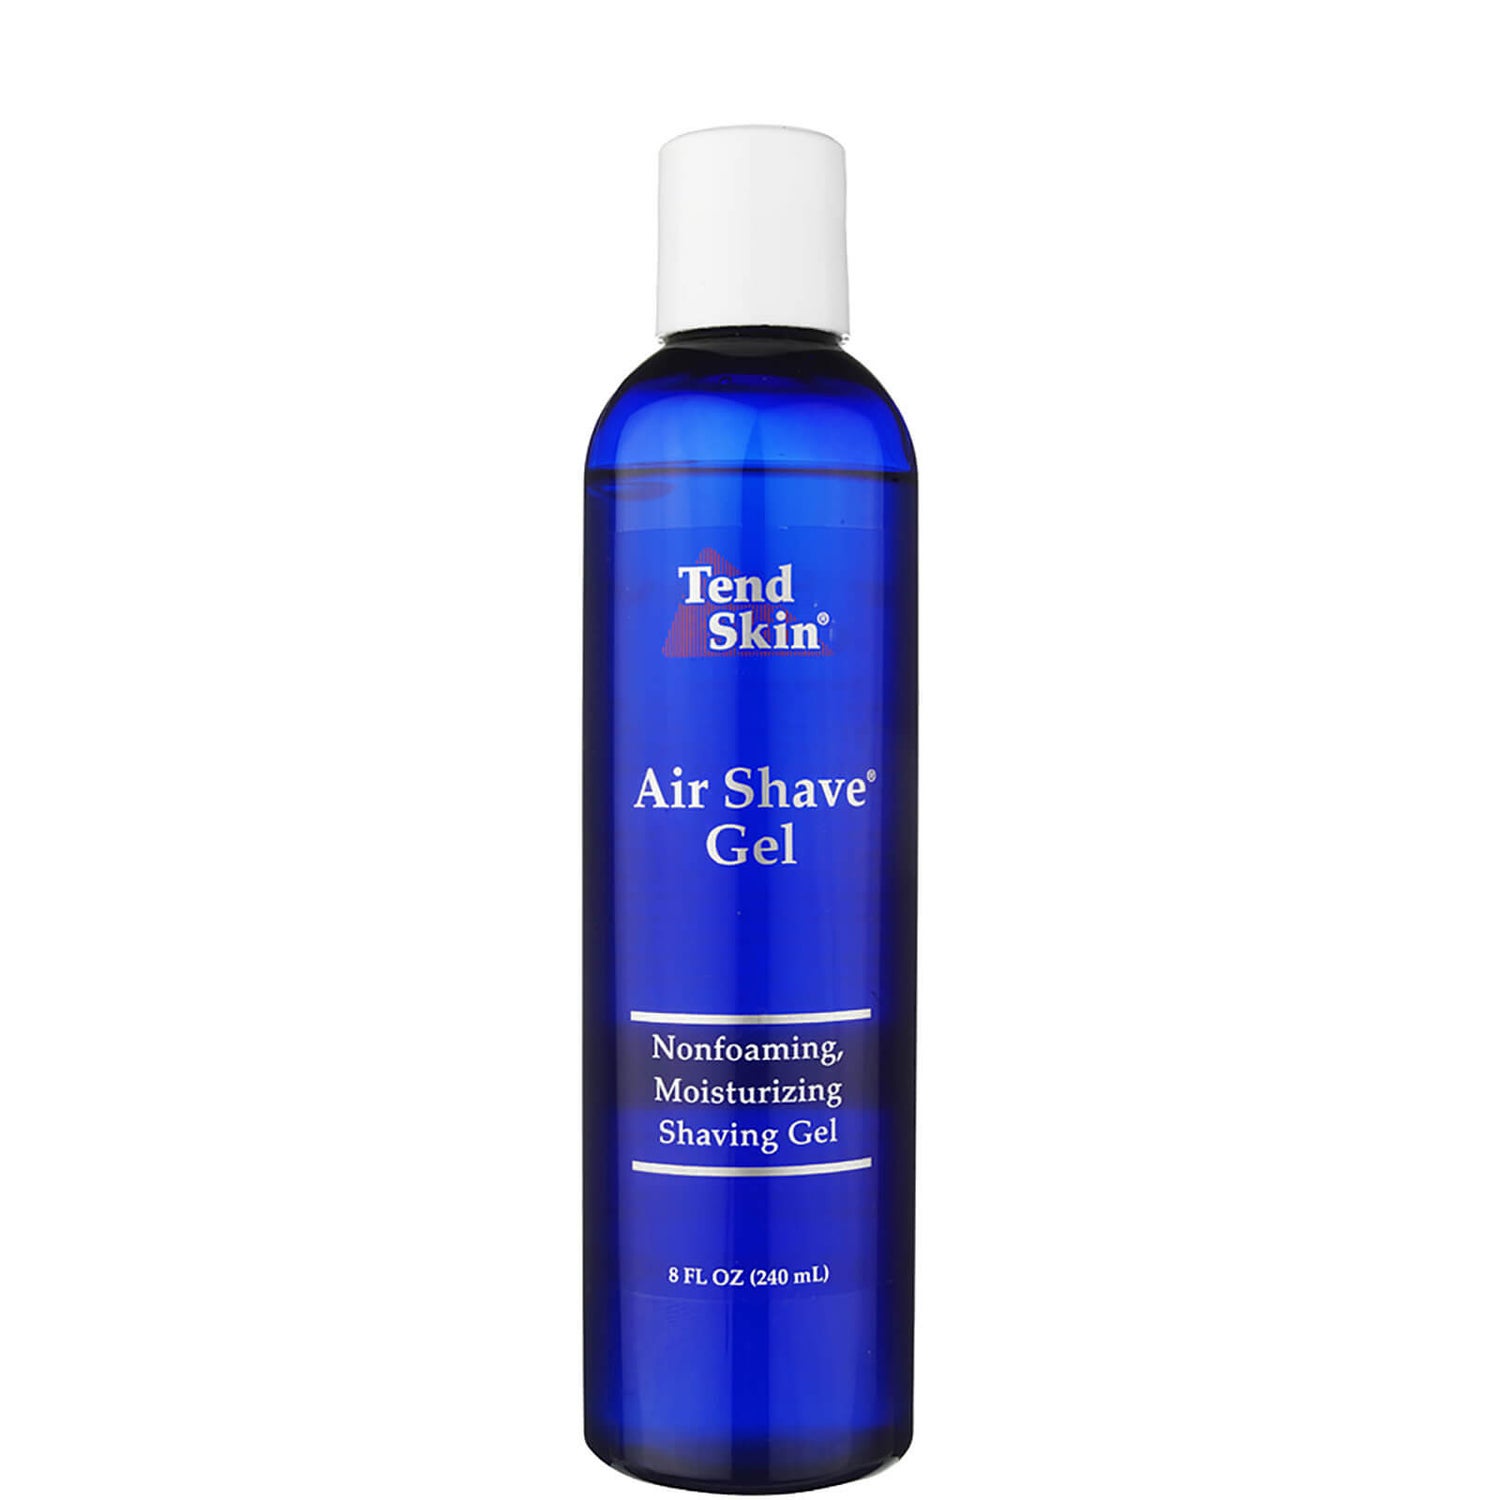 Tend Skin Air Shave Gel 8oz